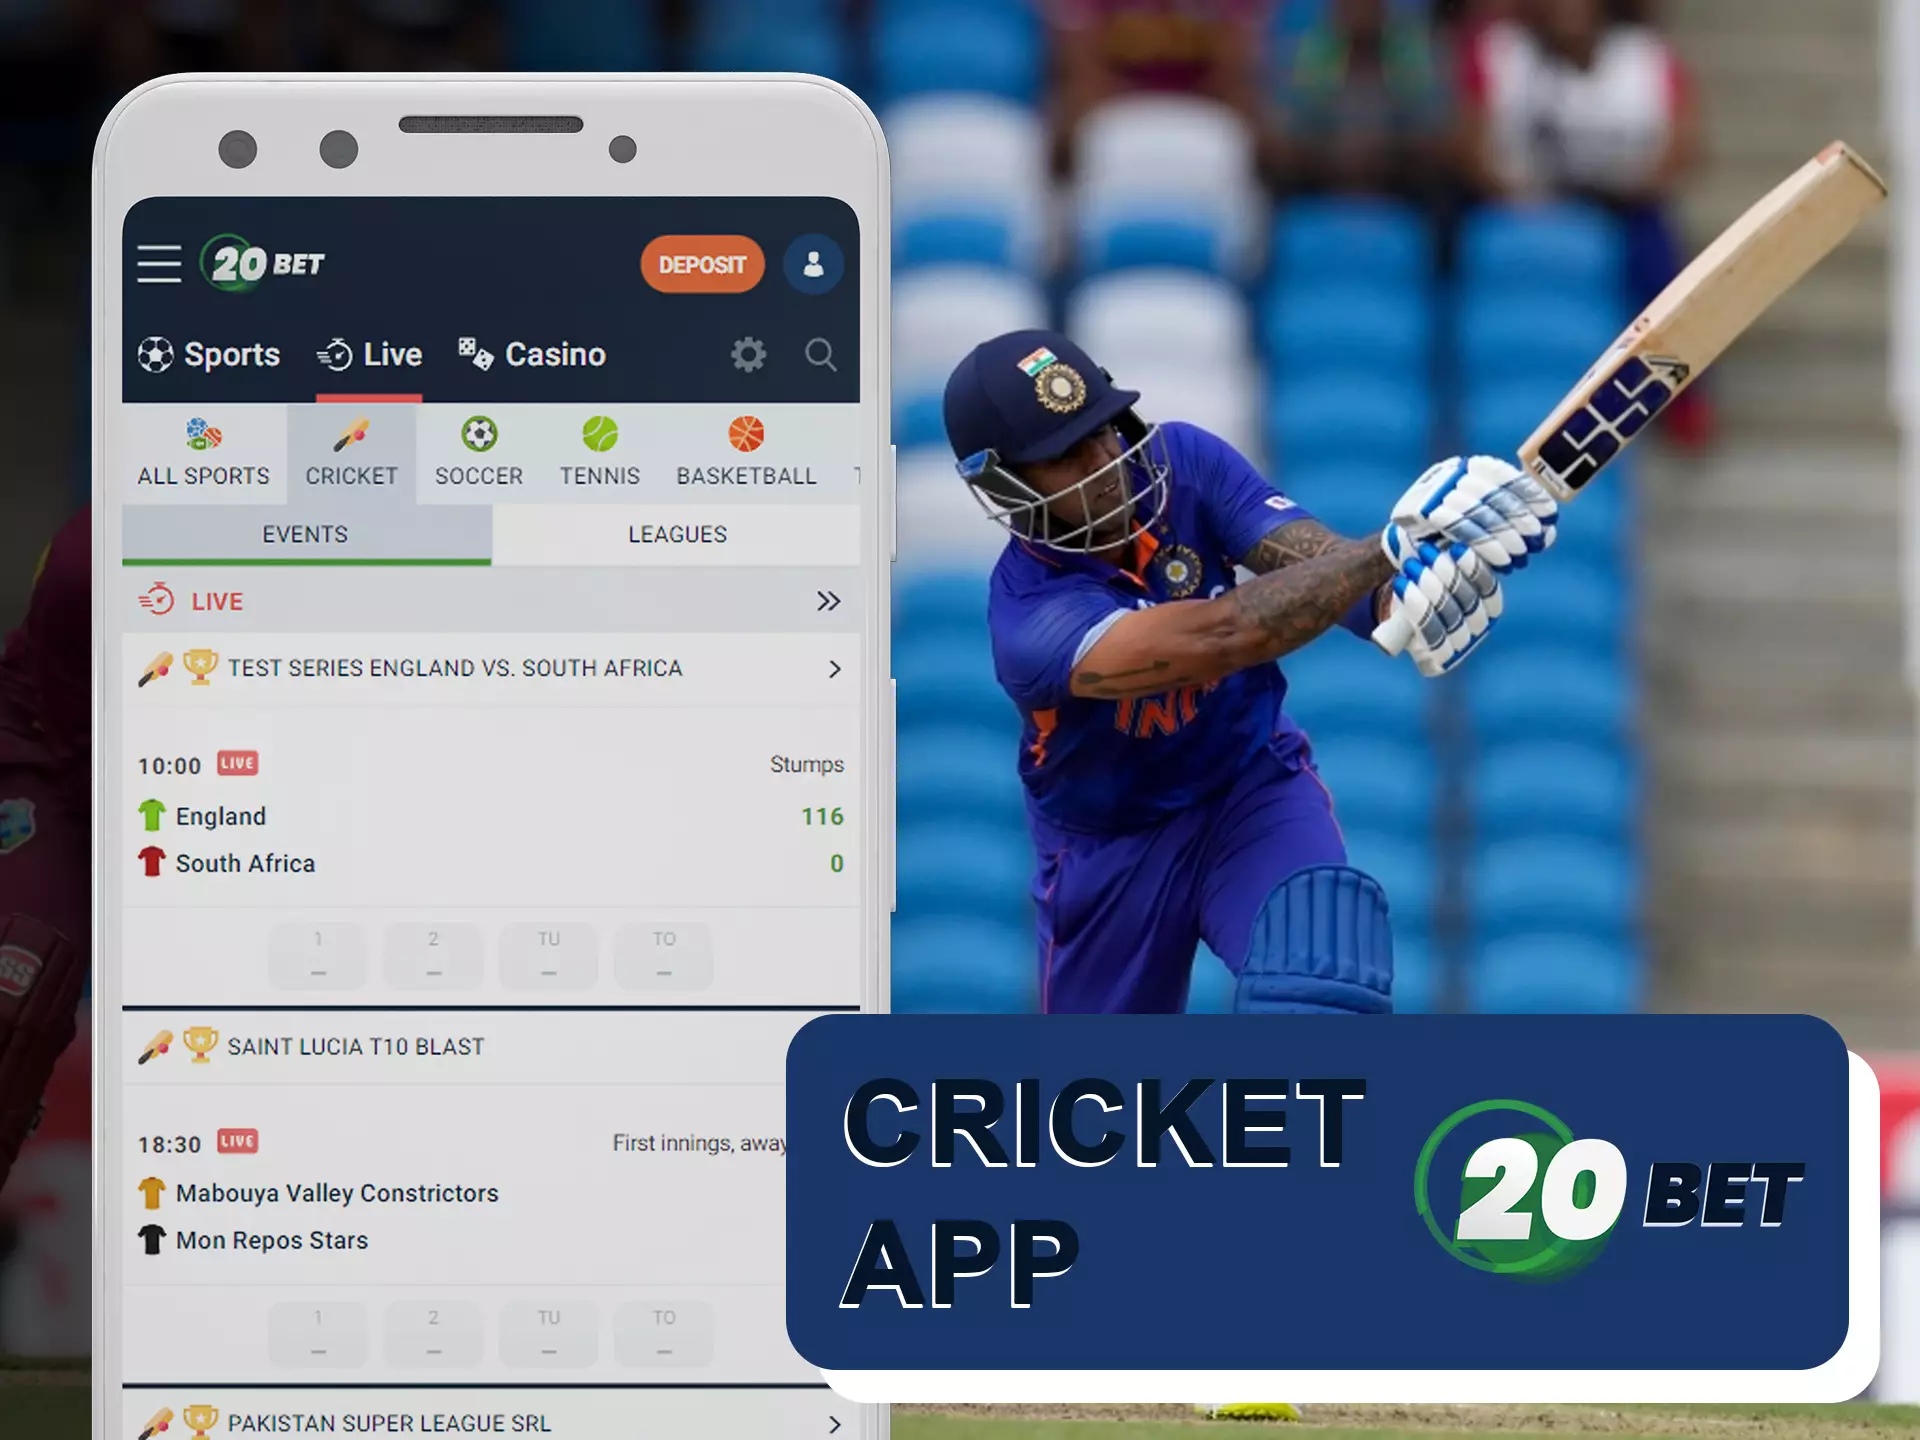 Watch the best cricket teams win in the 20bet app.